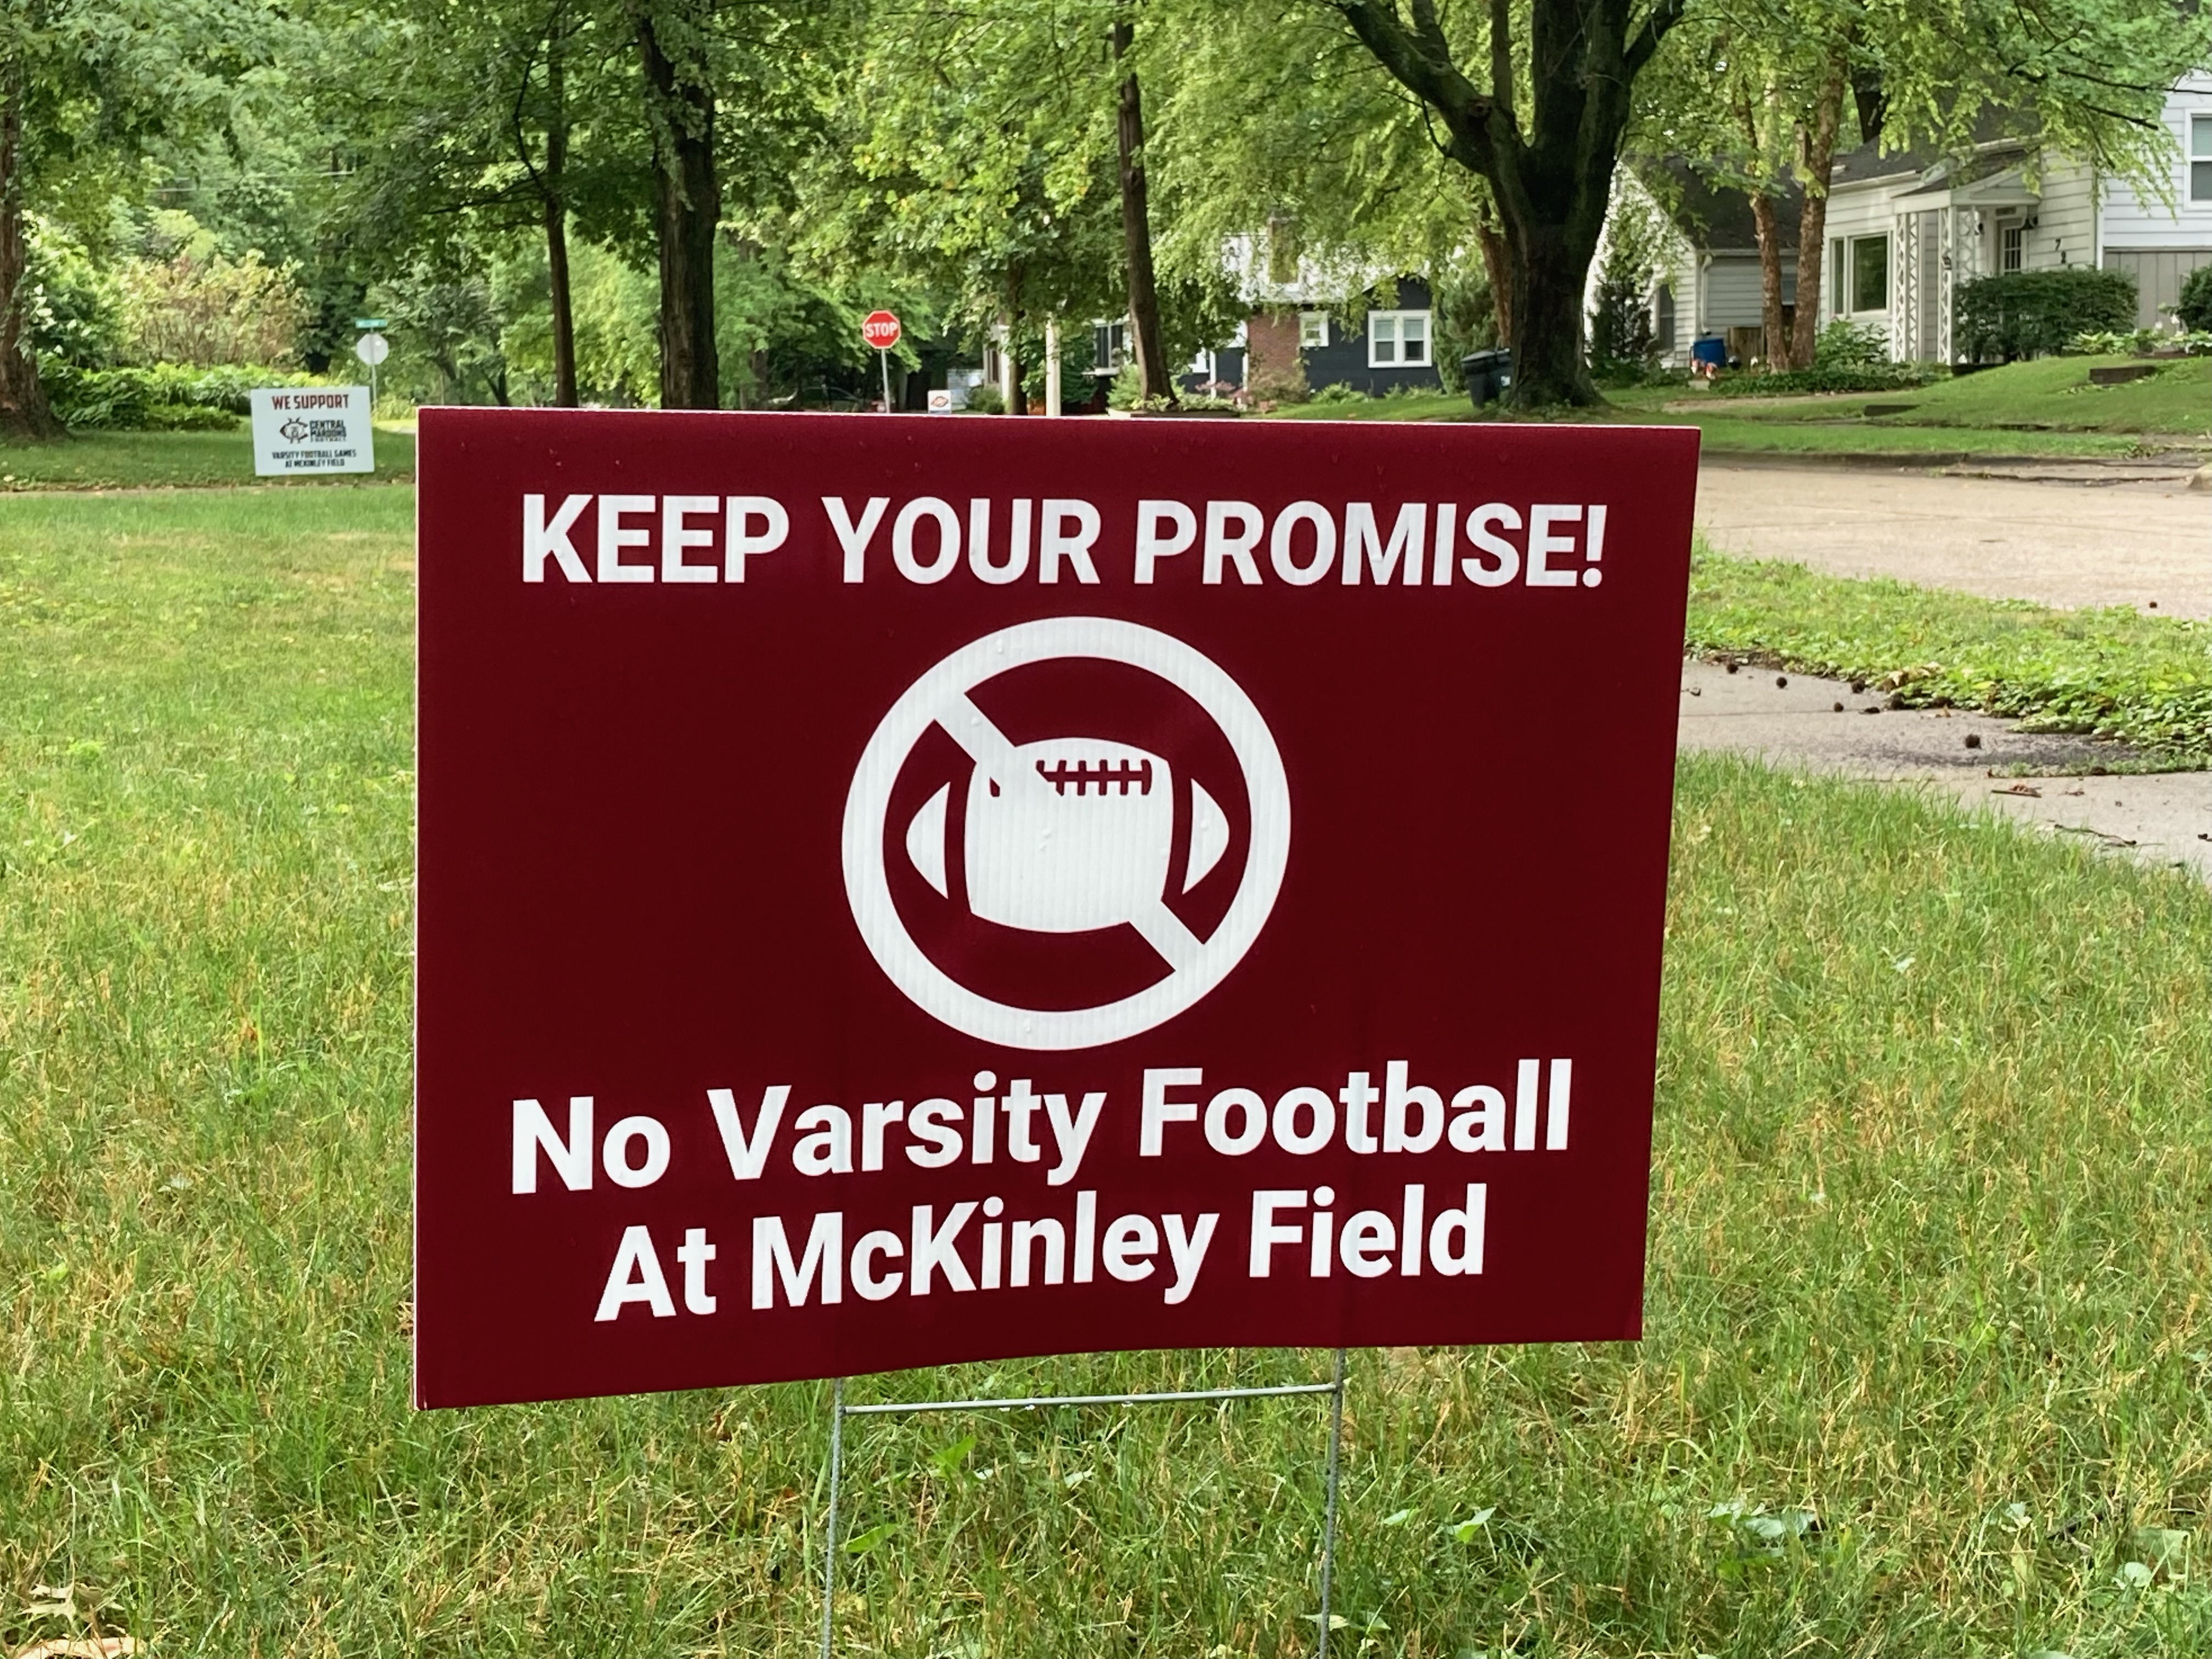 No varsity football at McKinley Field